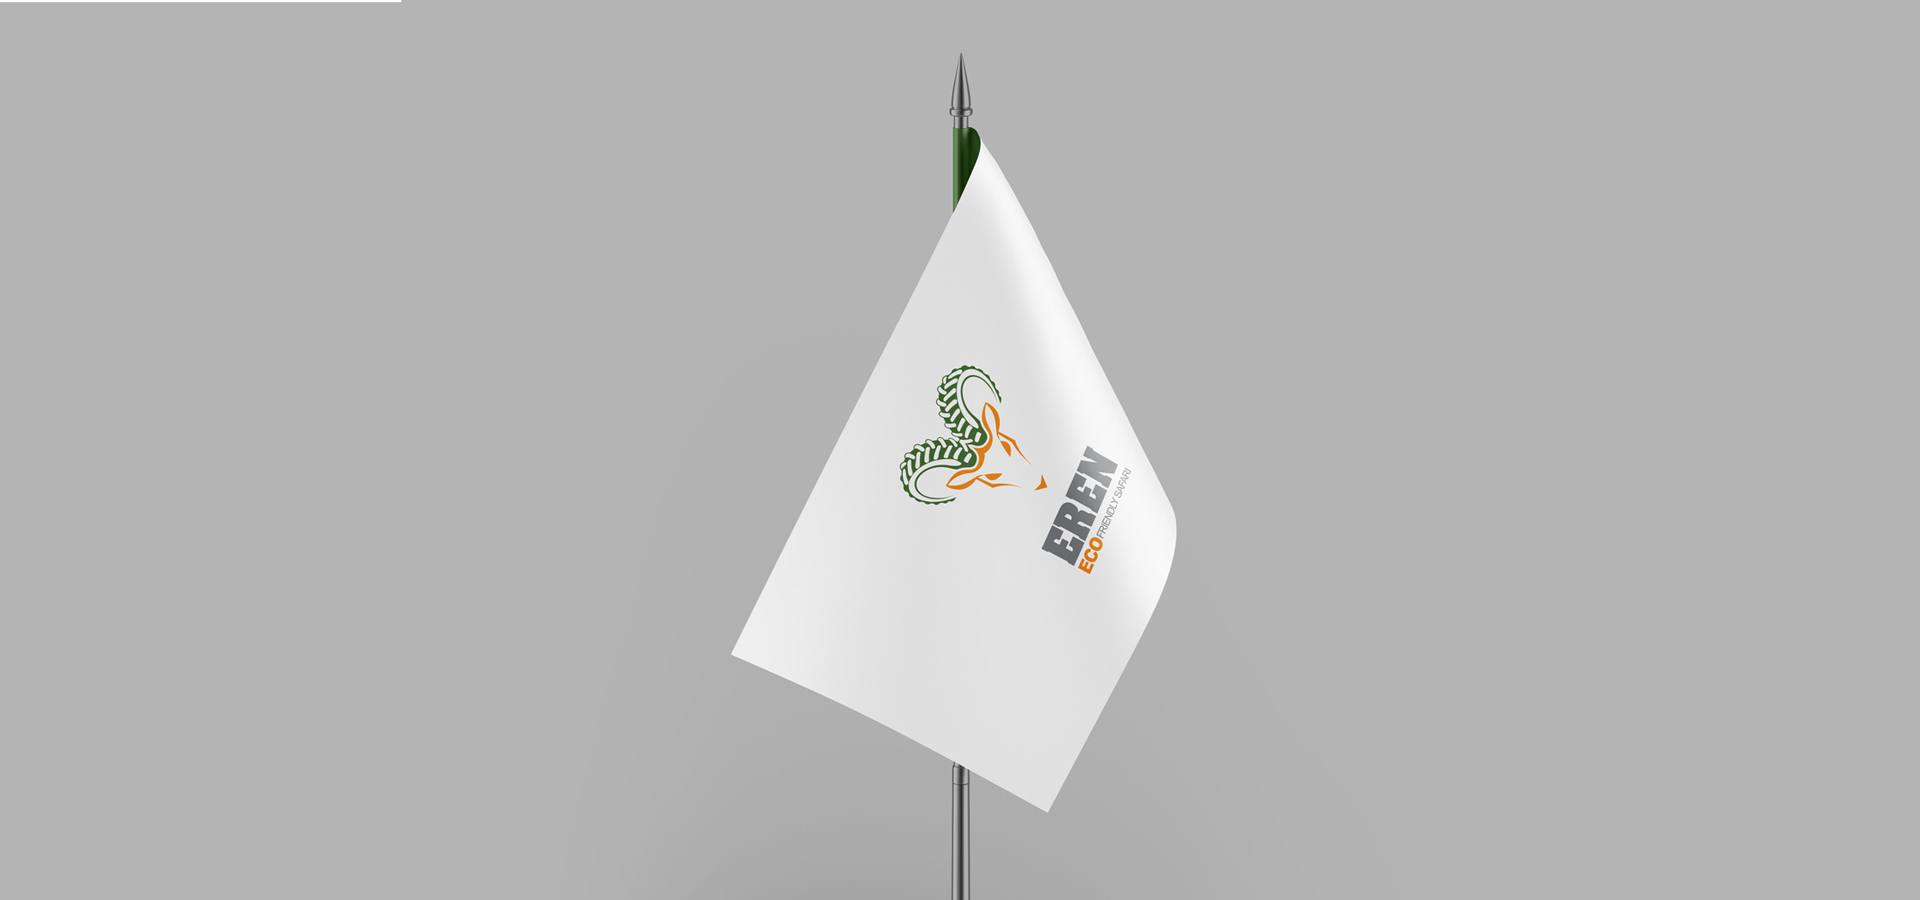 white flag with off road logo design of eren